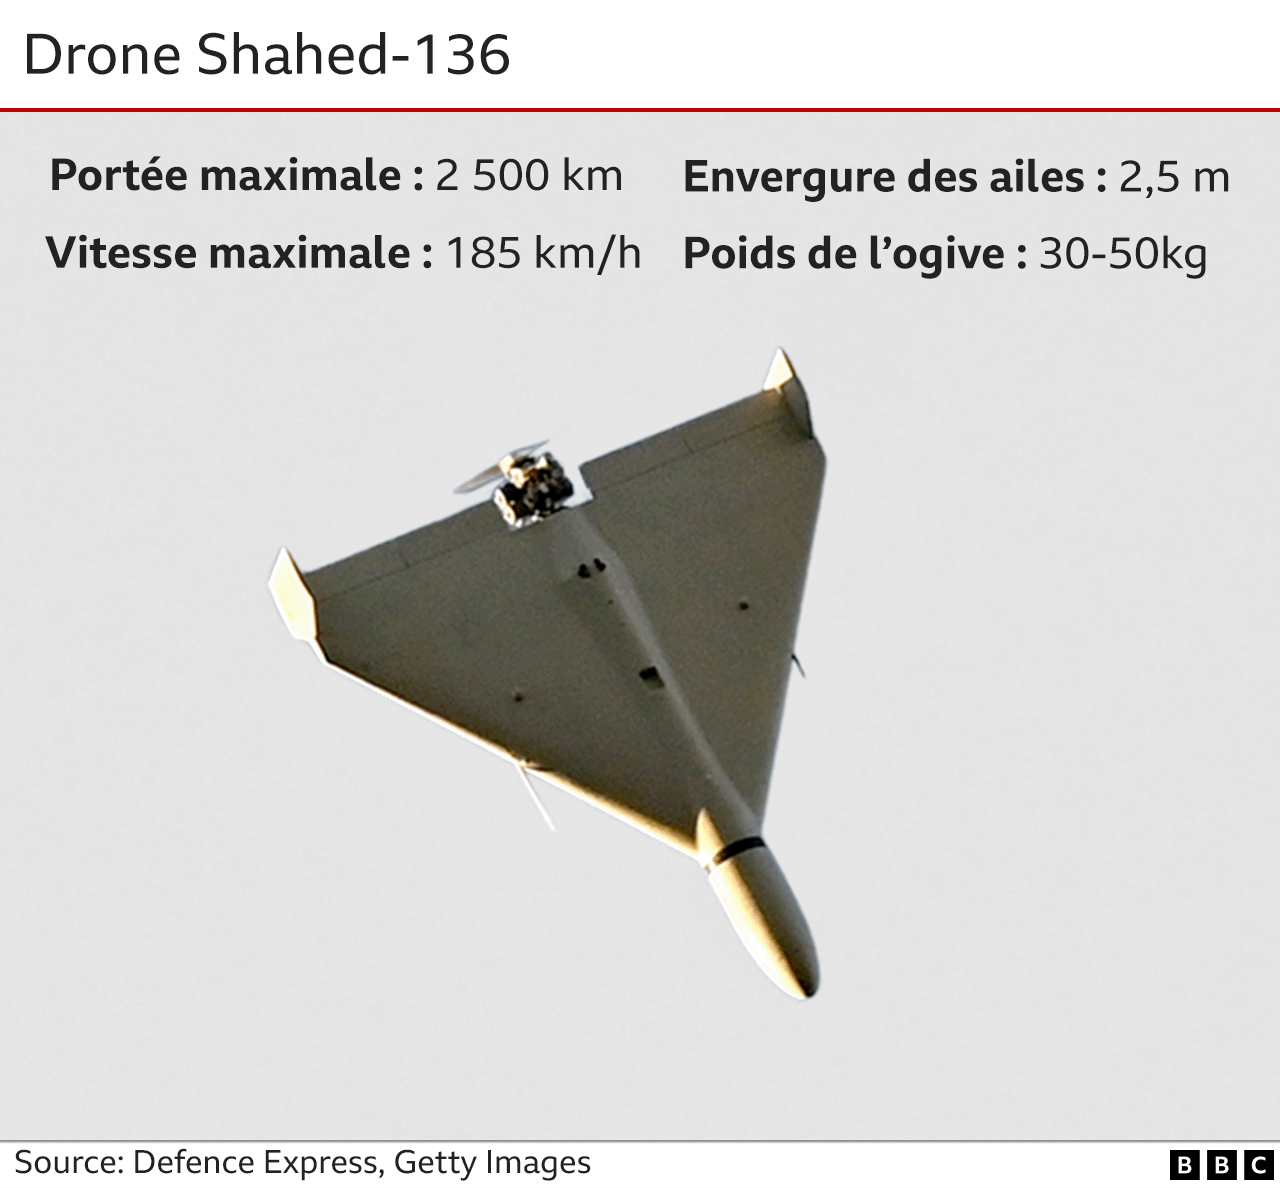 Le drone Shahid-136